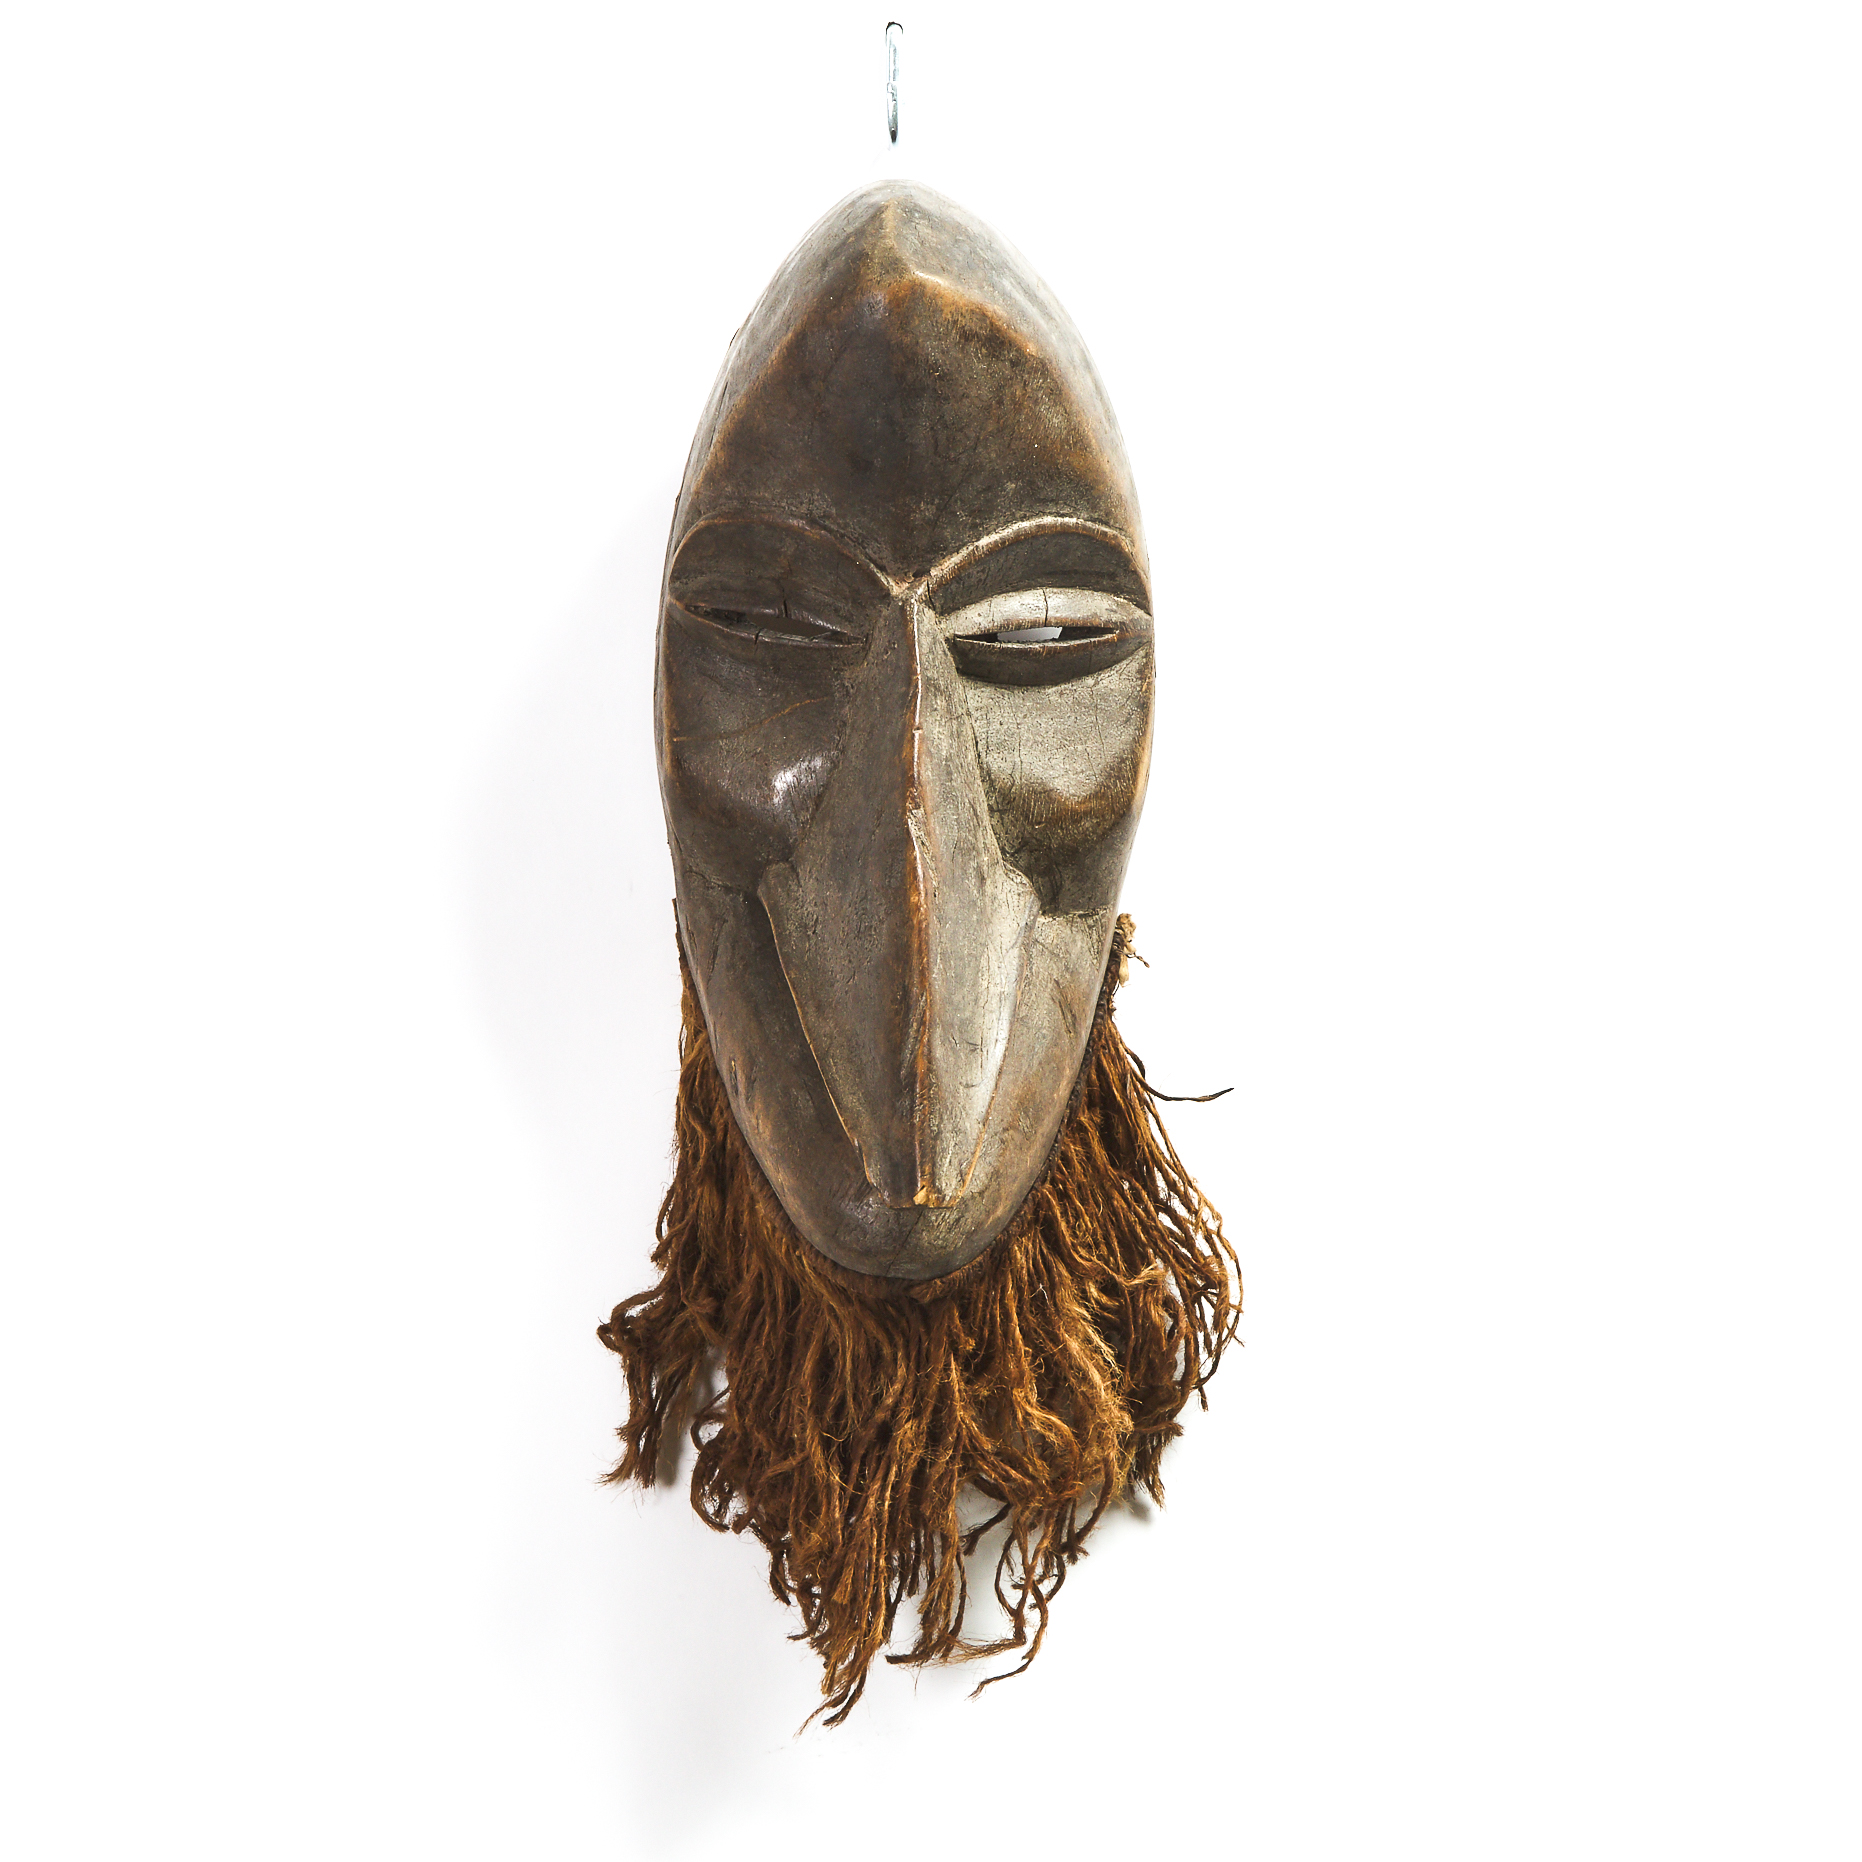 Dan Gagon Mask, Ivory Coast/Liberia, mid to late 20th century